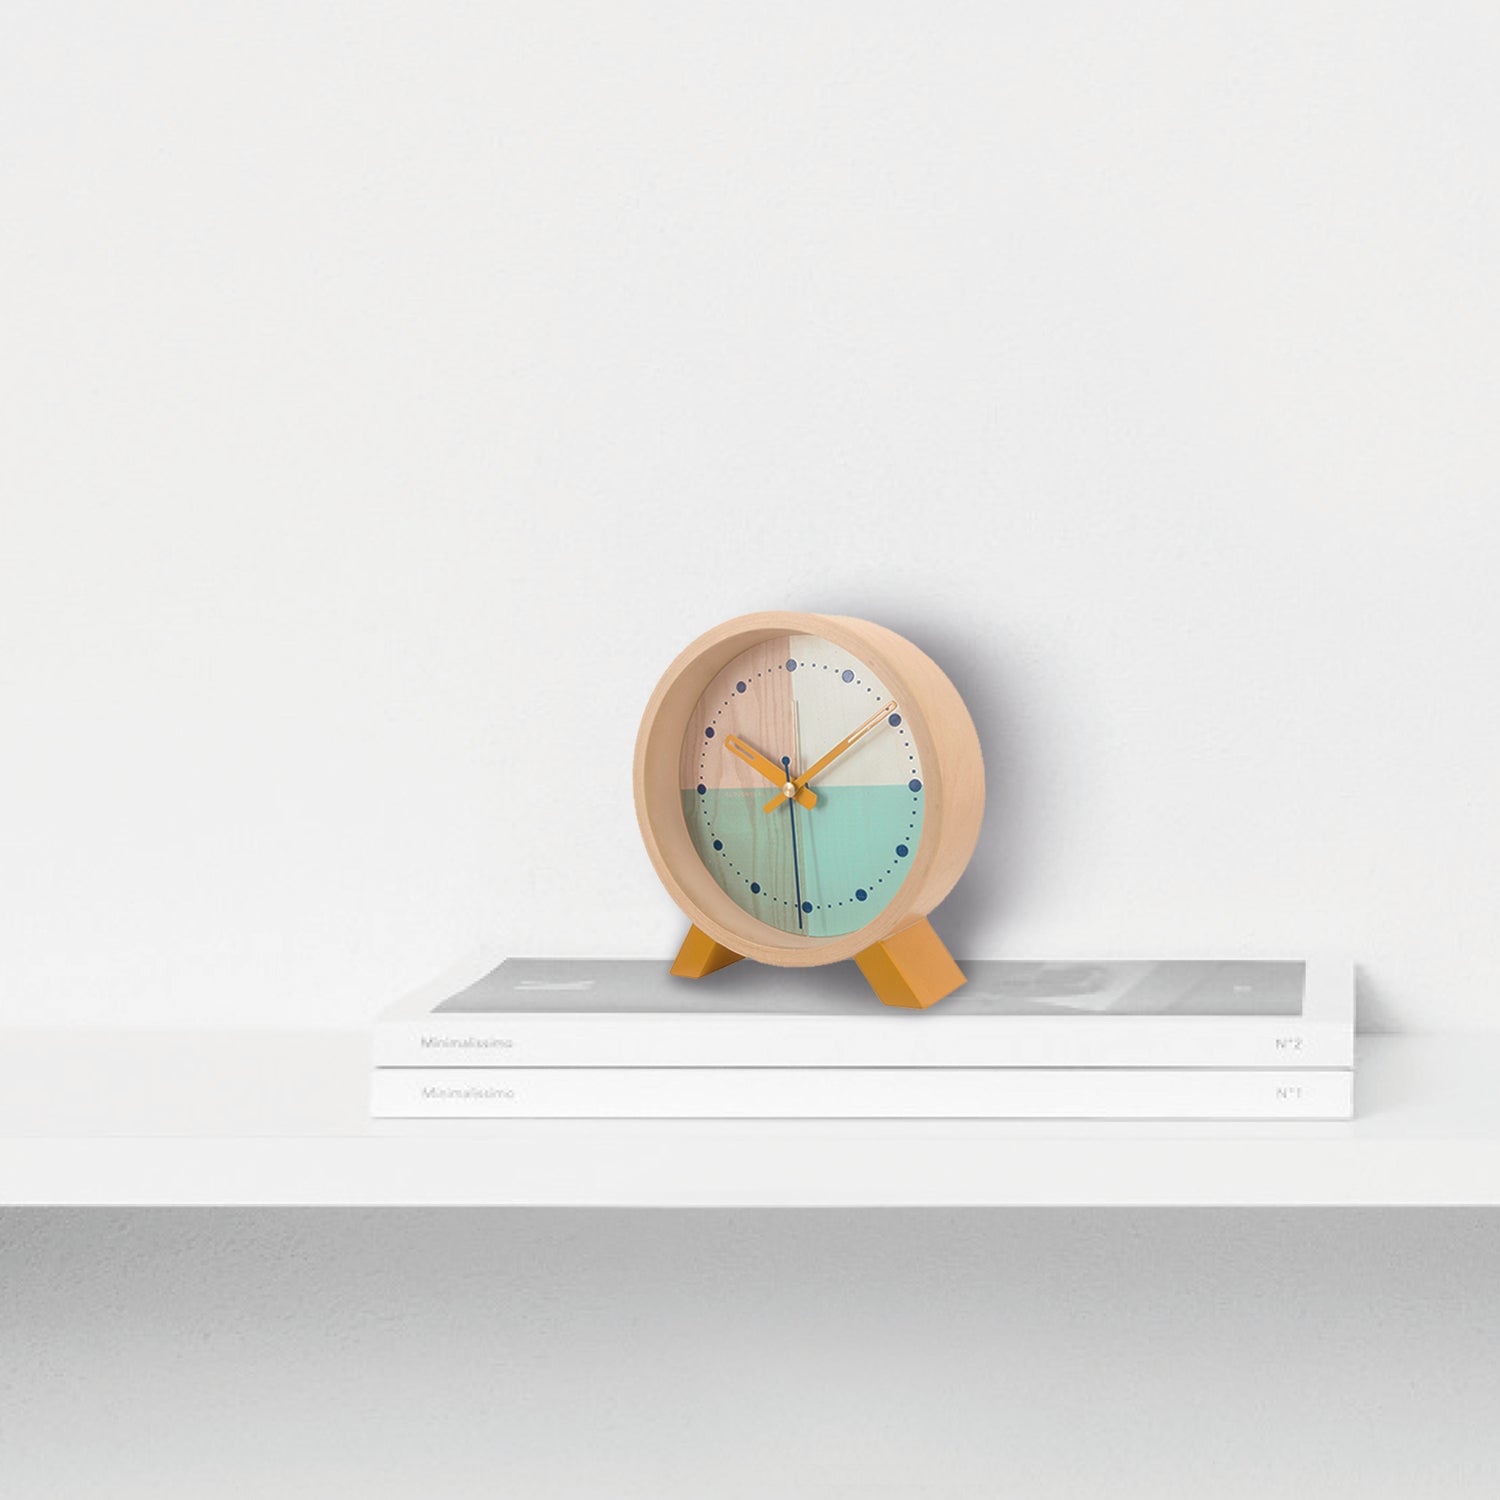 Cloudnola Flor Turquoise Desk Alarm Clock